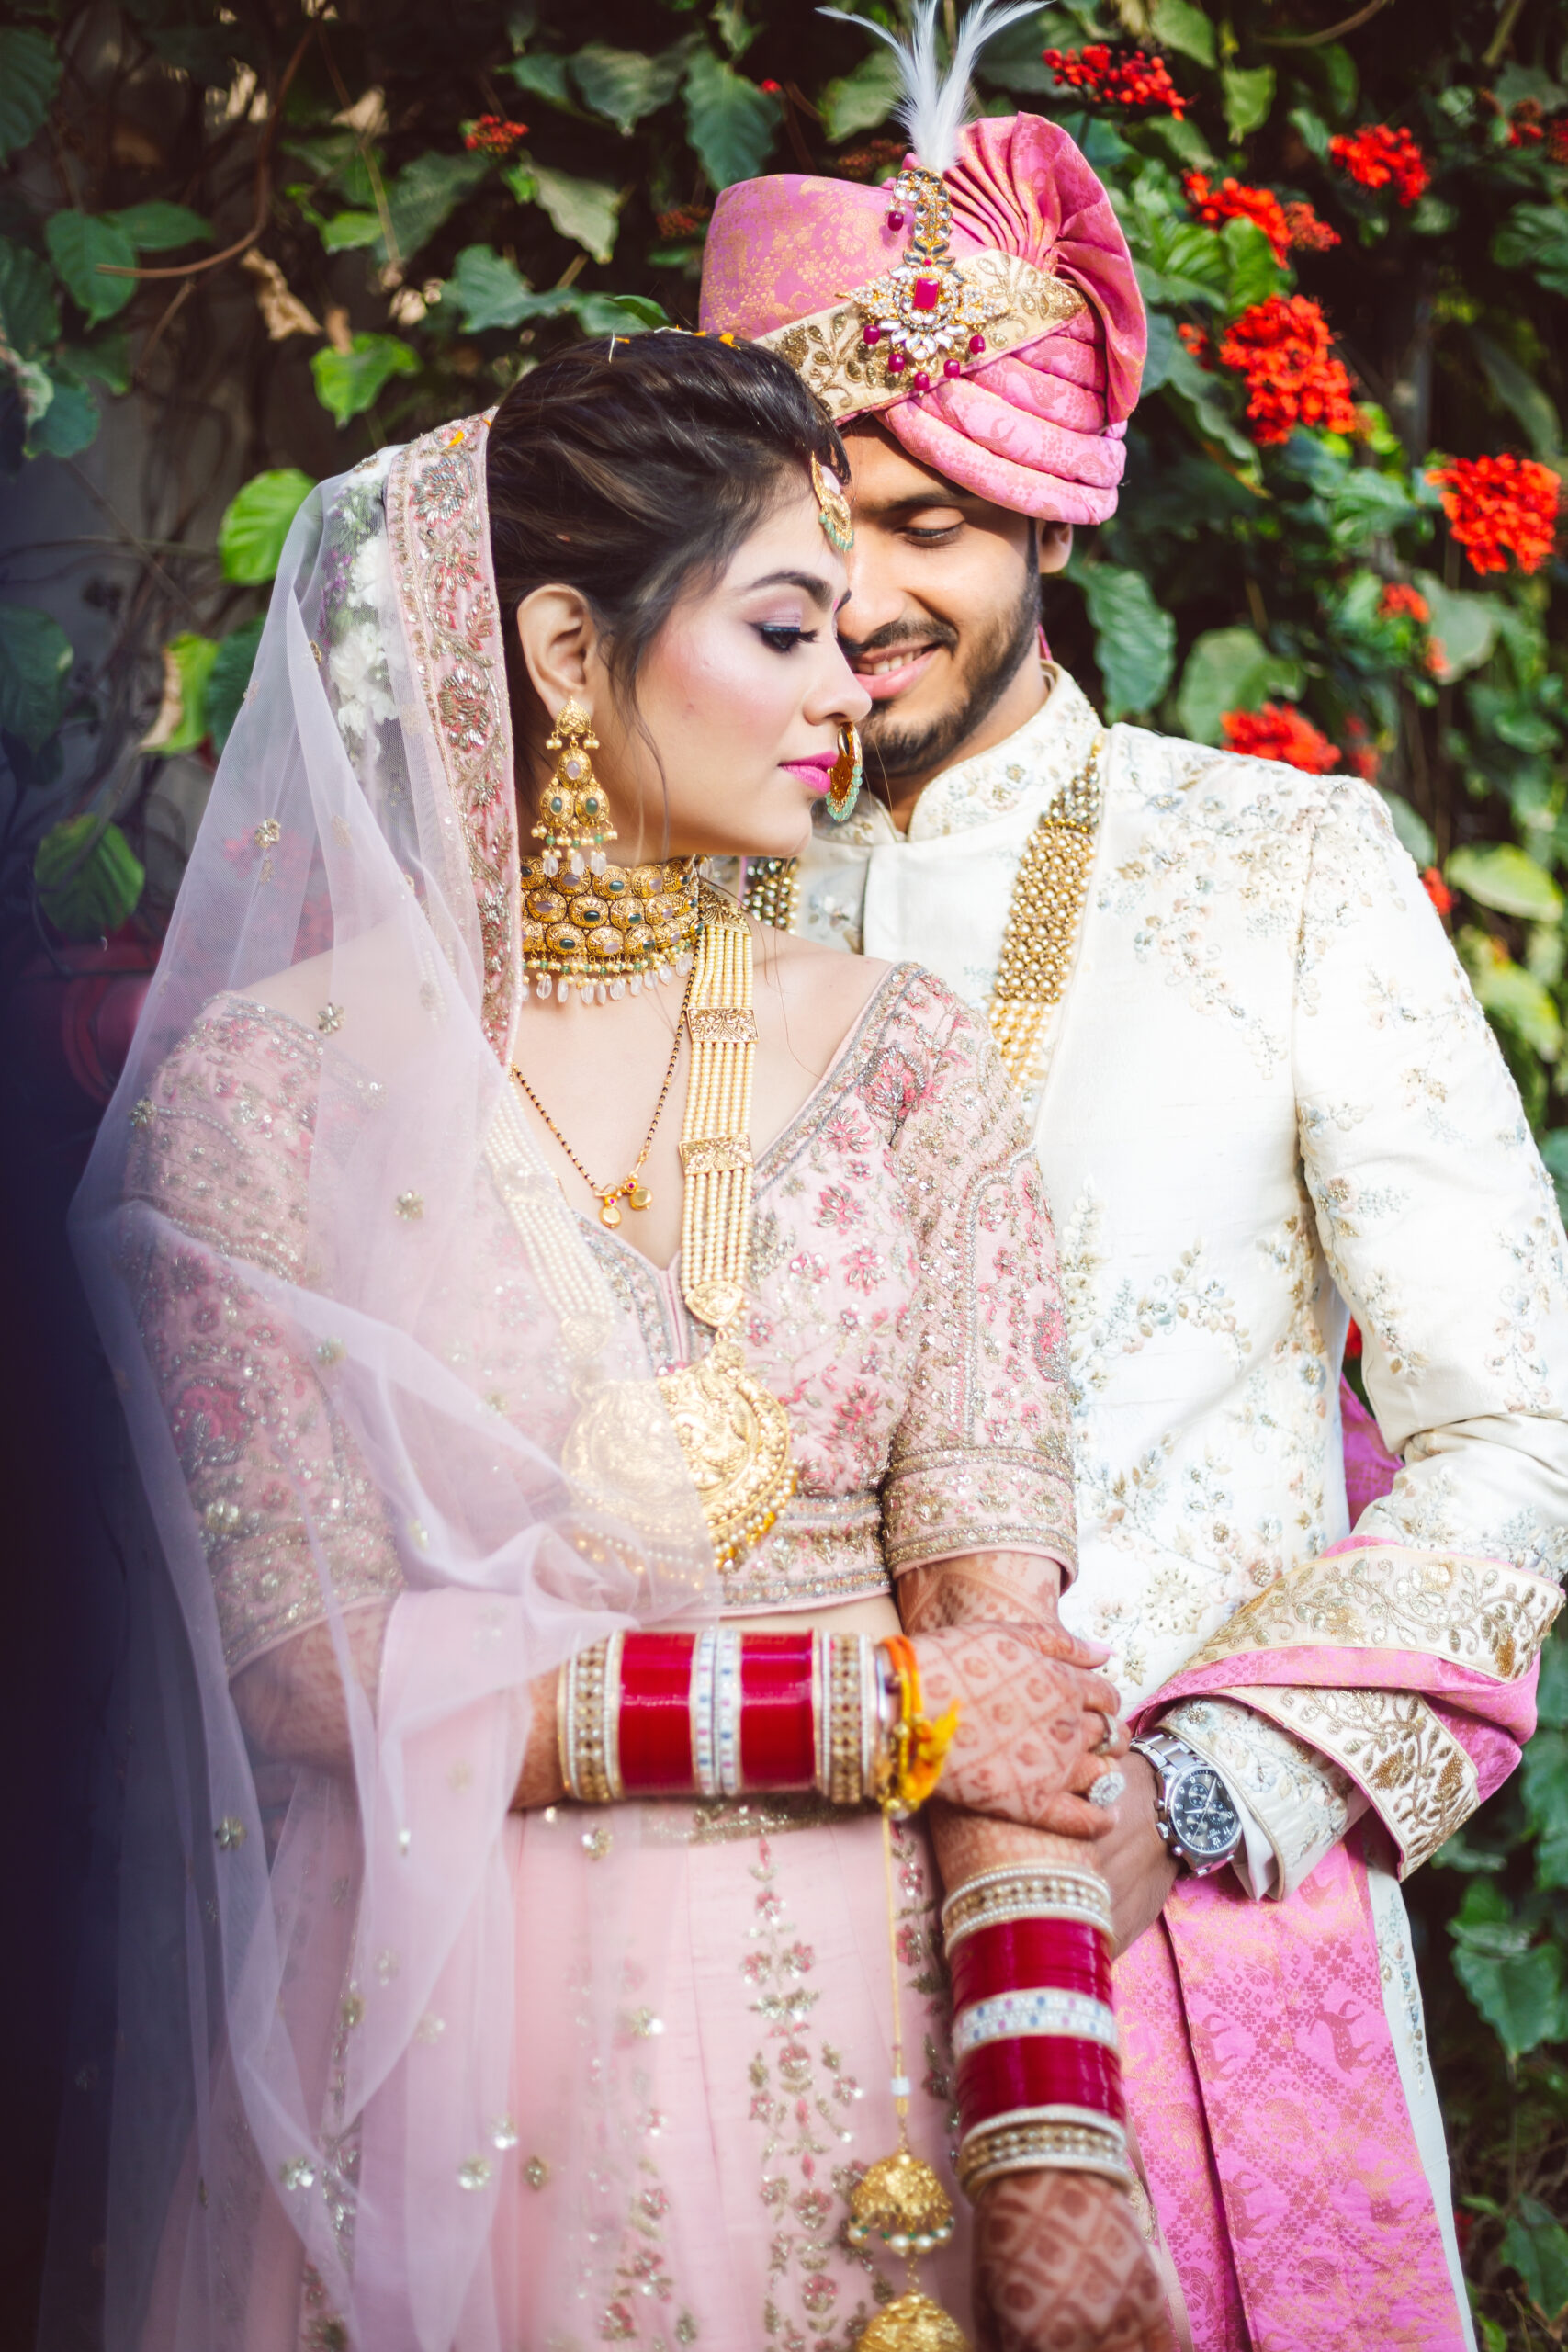 A Strange But Beautiful Story Of Pure Love! | Weddingplz | Indian wedding  photography couples, Indian wedding poses, Wedding couple poses photography